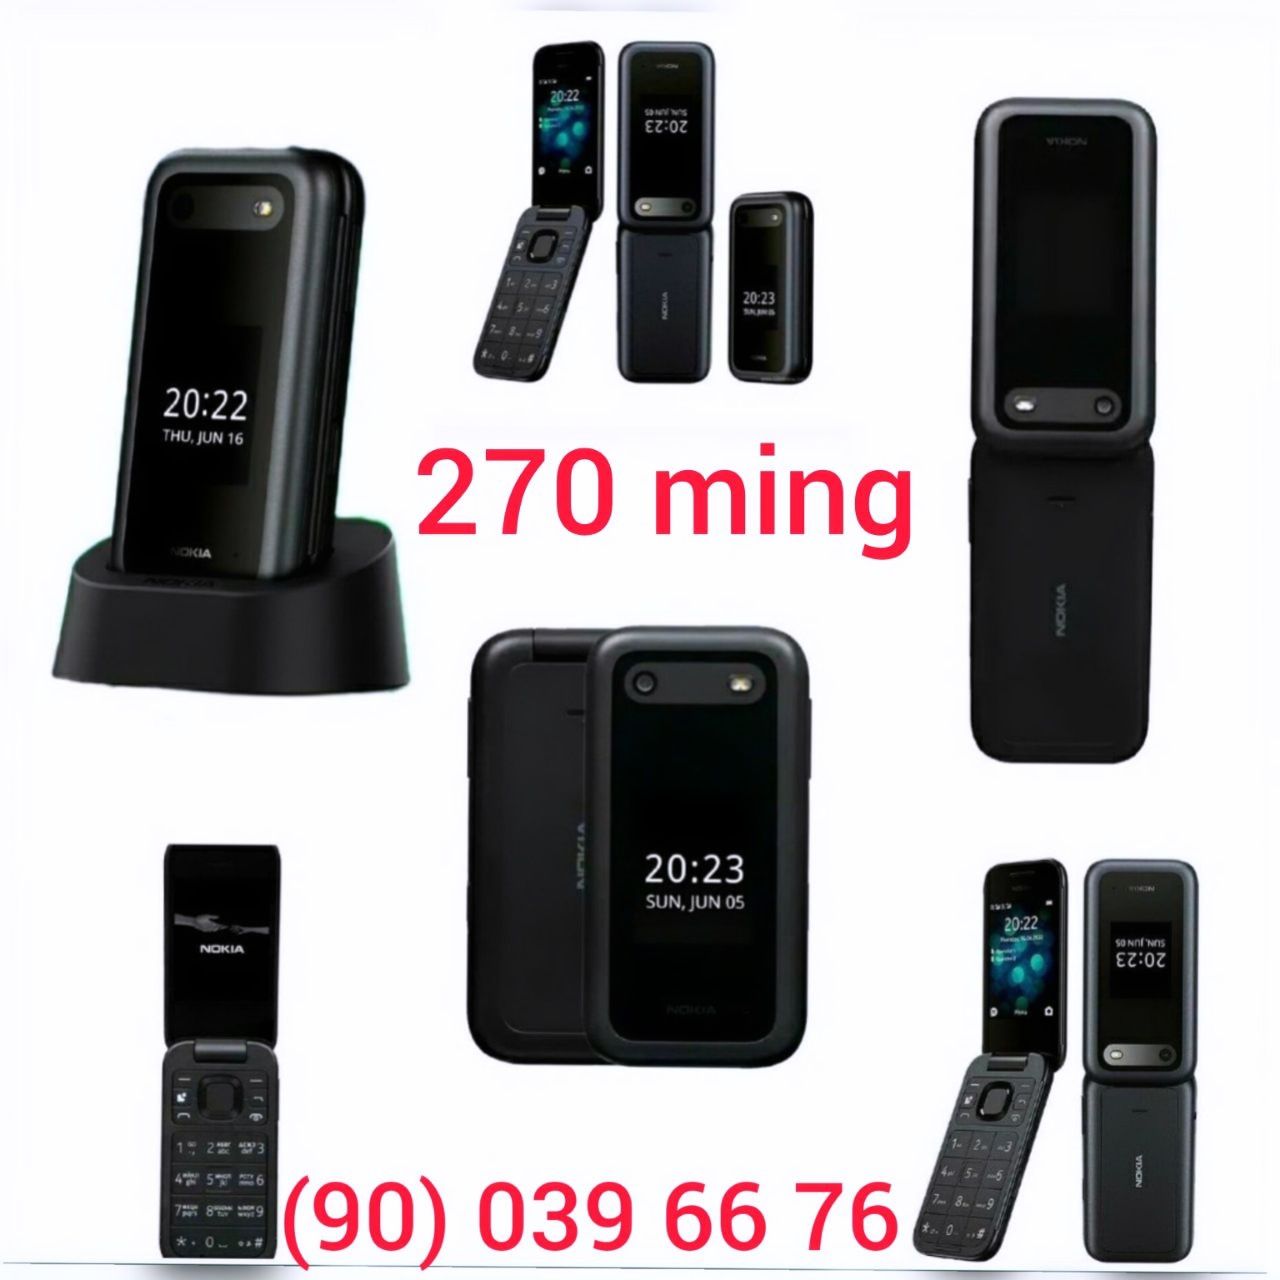 Gusto 3 (B311V) Samsung, Nokia 2720 flip, Nokia 2660 flip, Flip 14 Pro